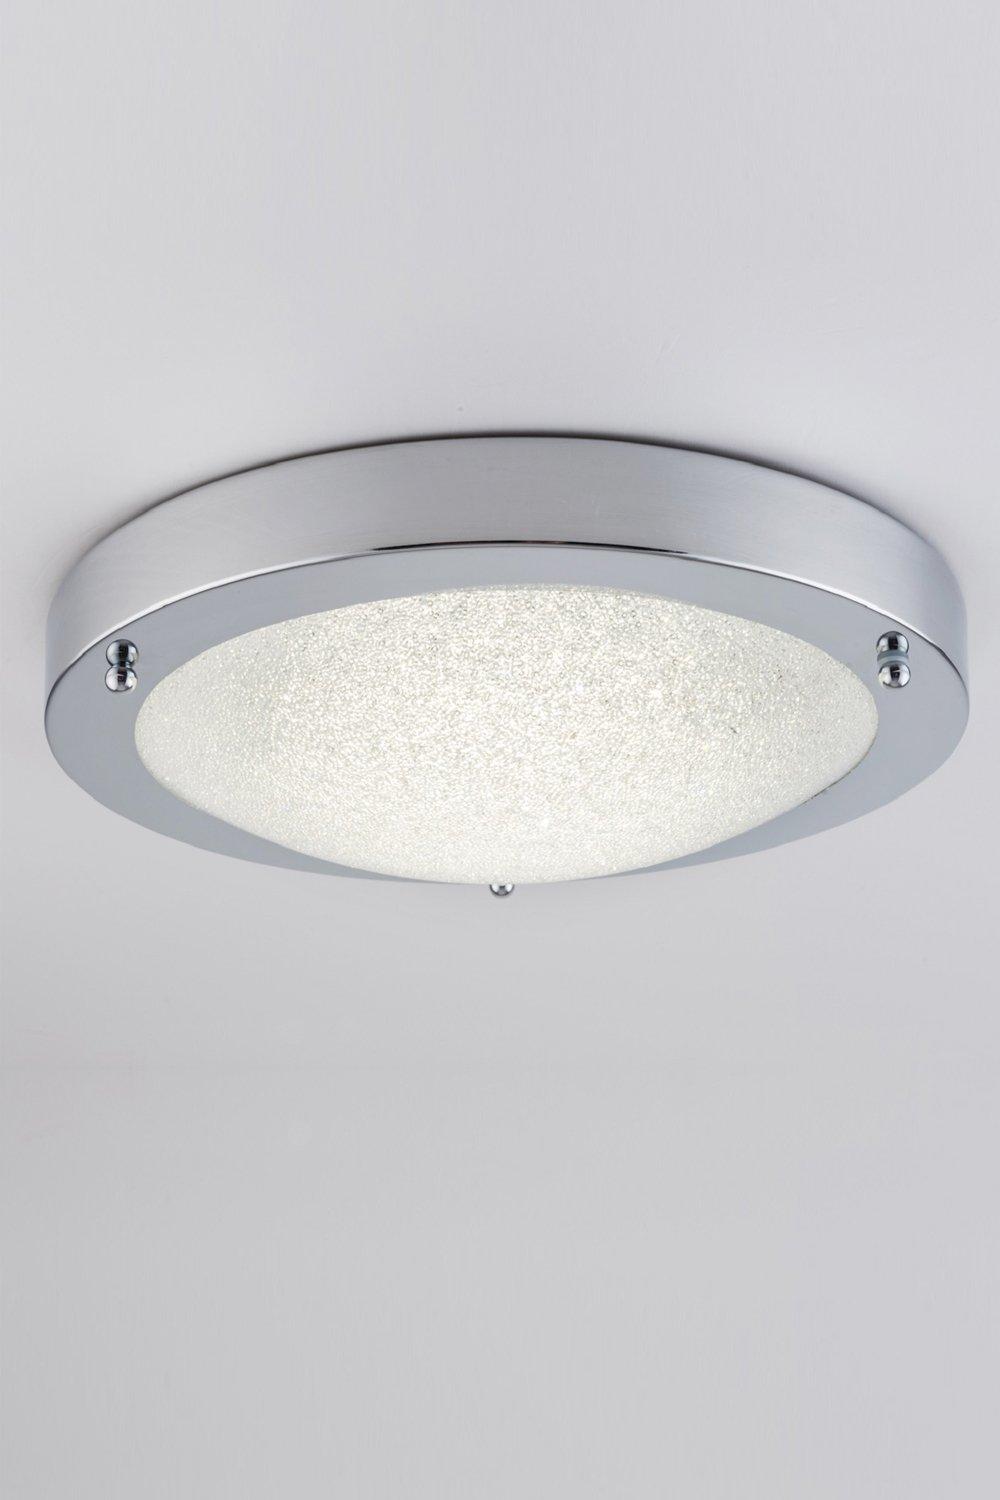 LED Bathroom Ceiling Light Chrome Finish with Glass Shade Natural White (4000K)